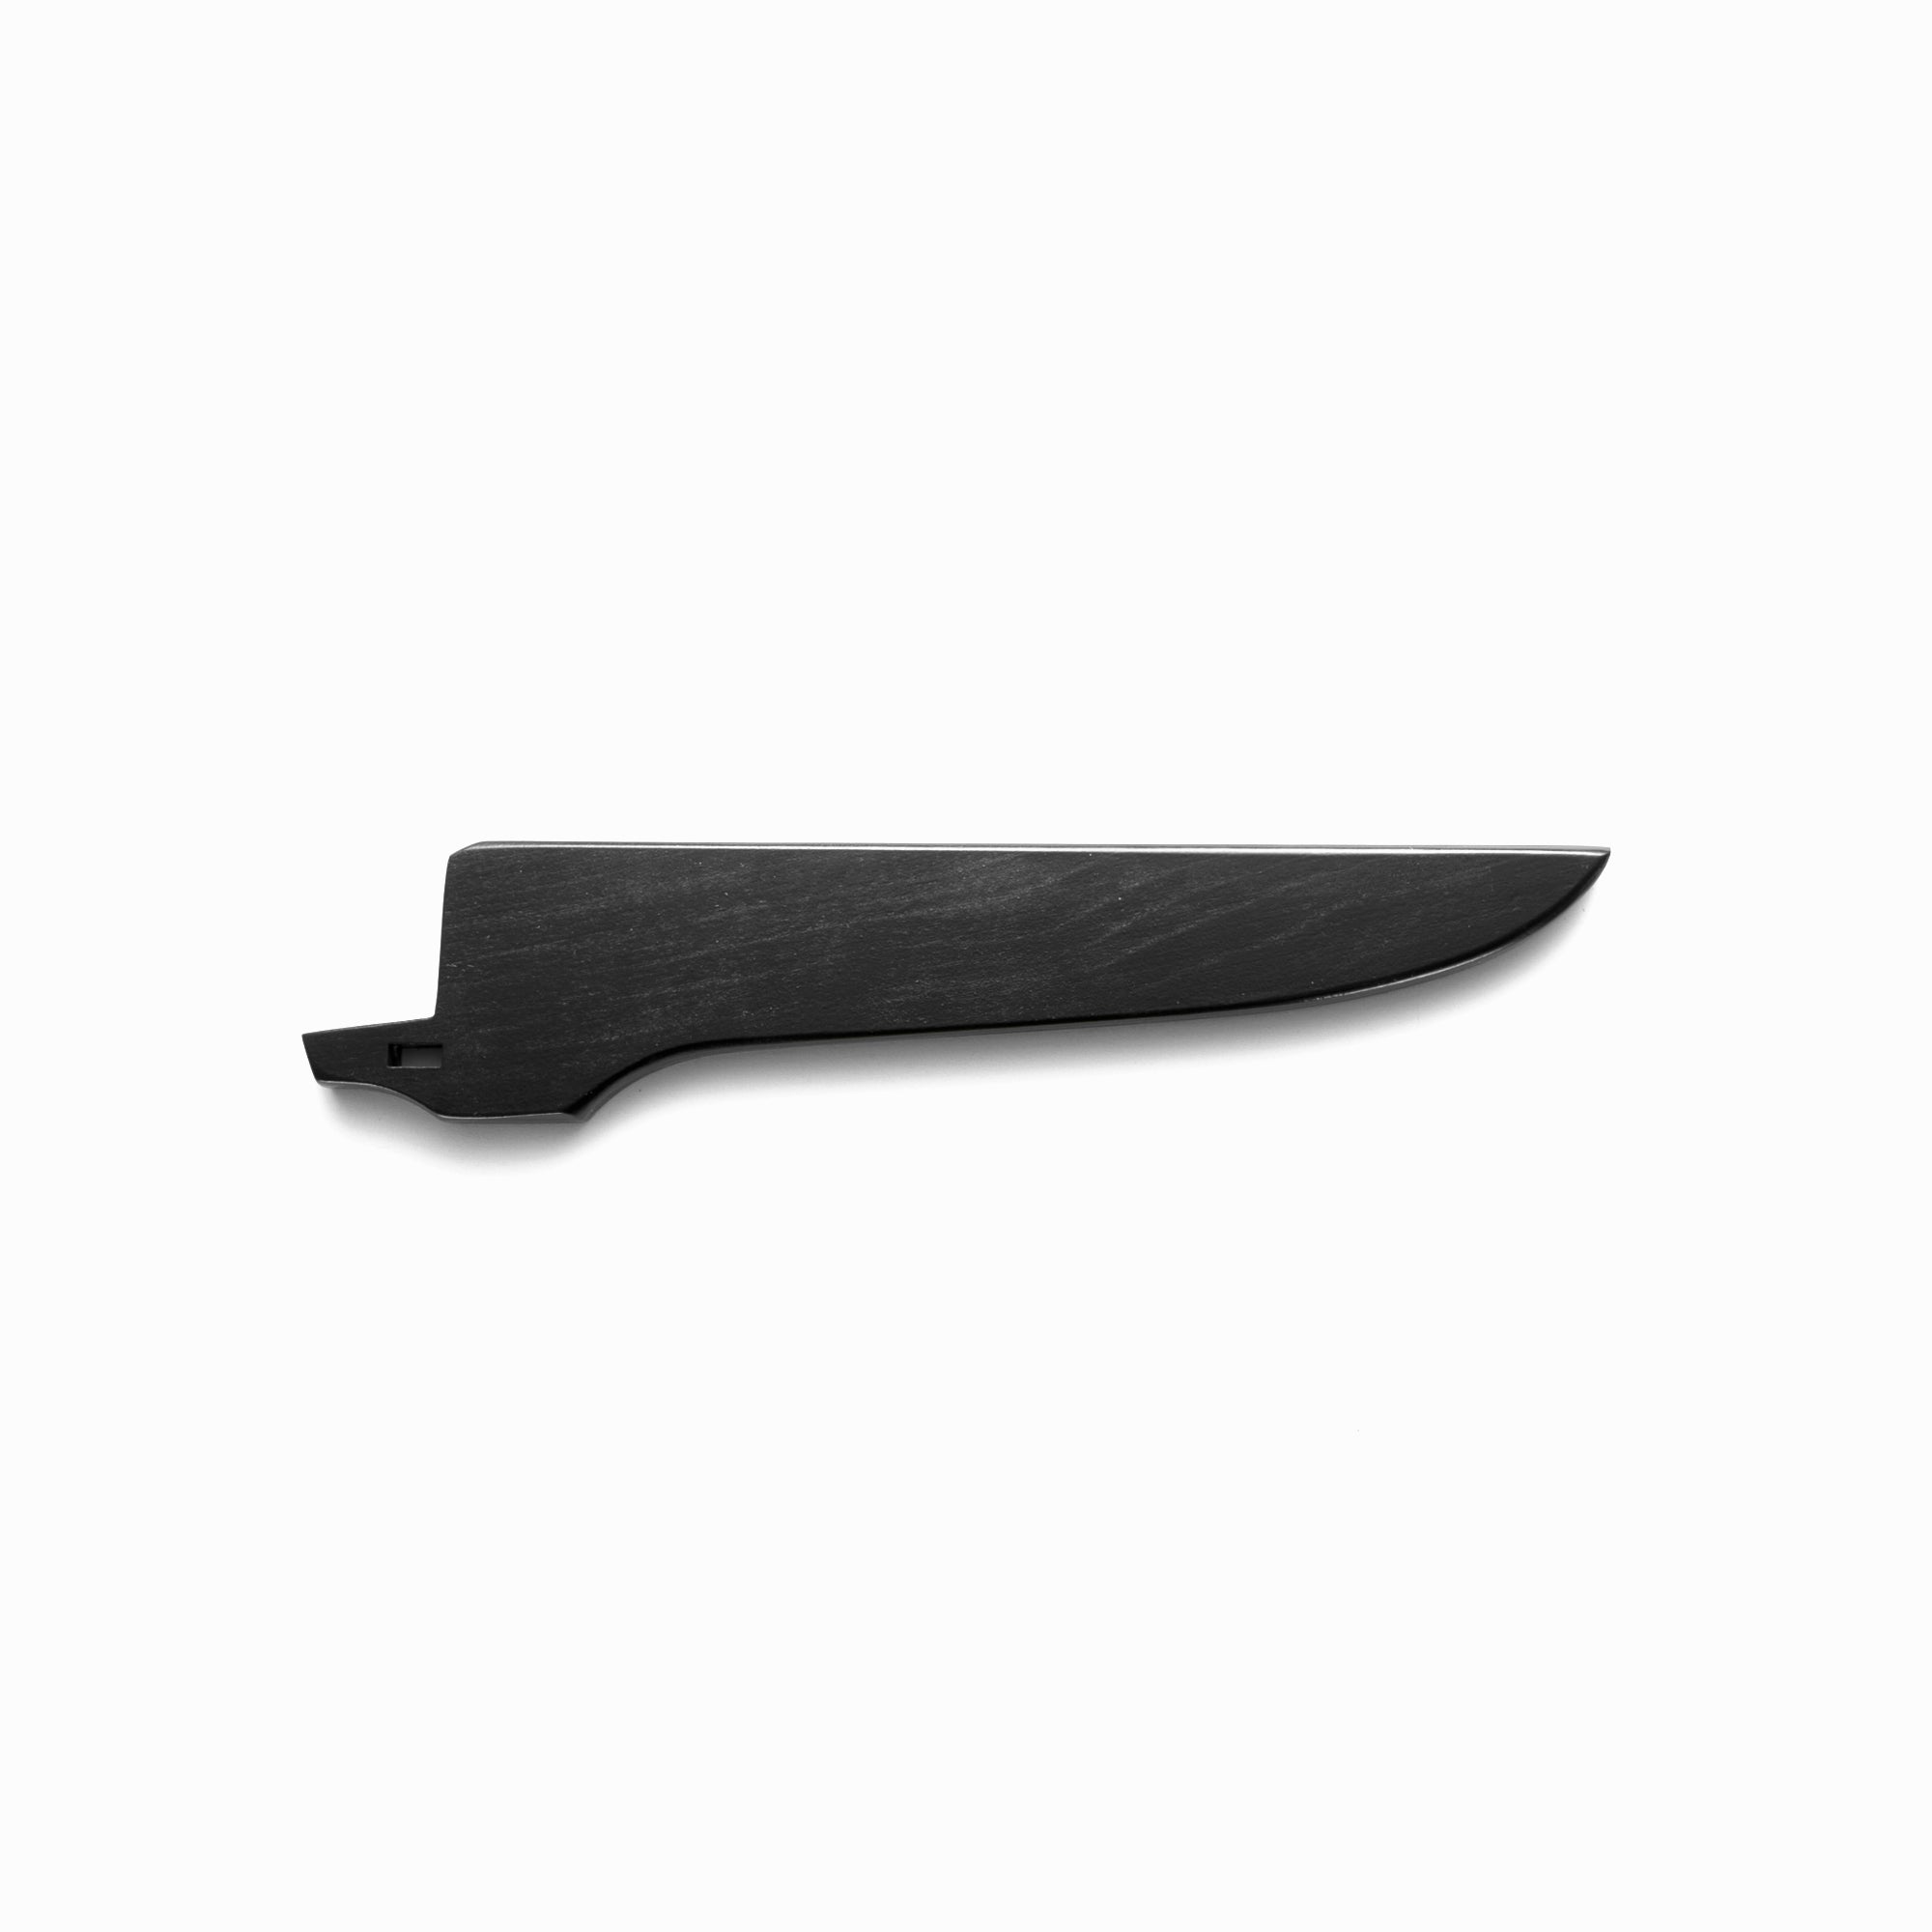 Black wood saya knife sheath for Town Cutler Desert Dawn and Olneya 6" straight boning knife.